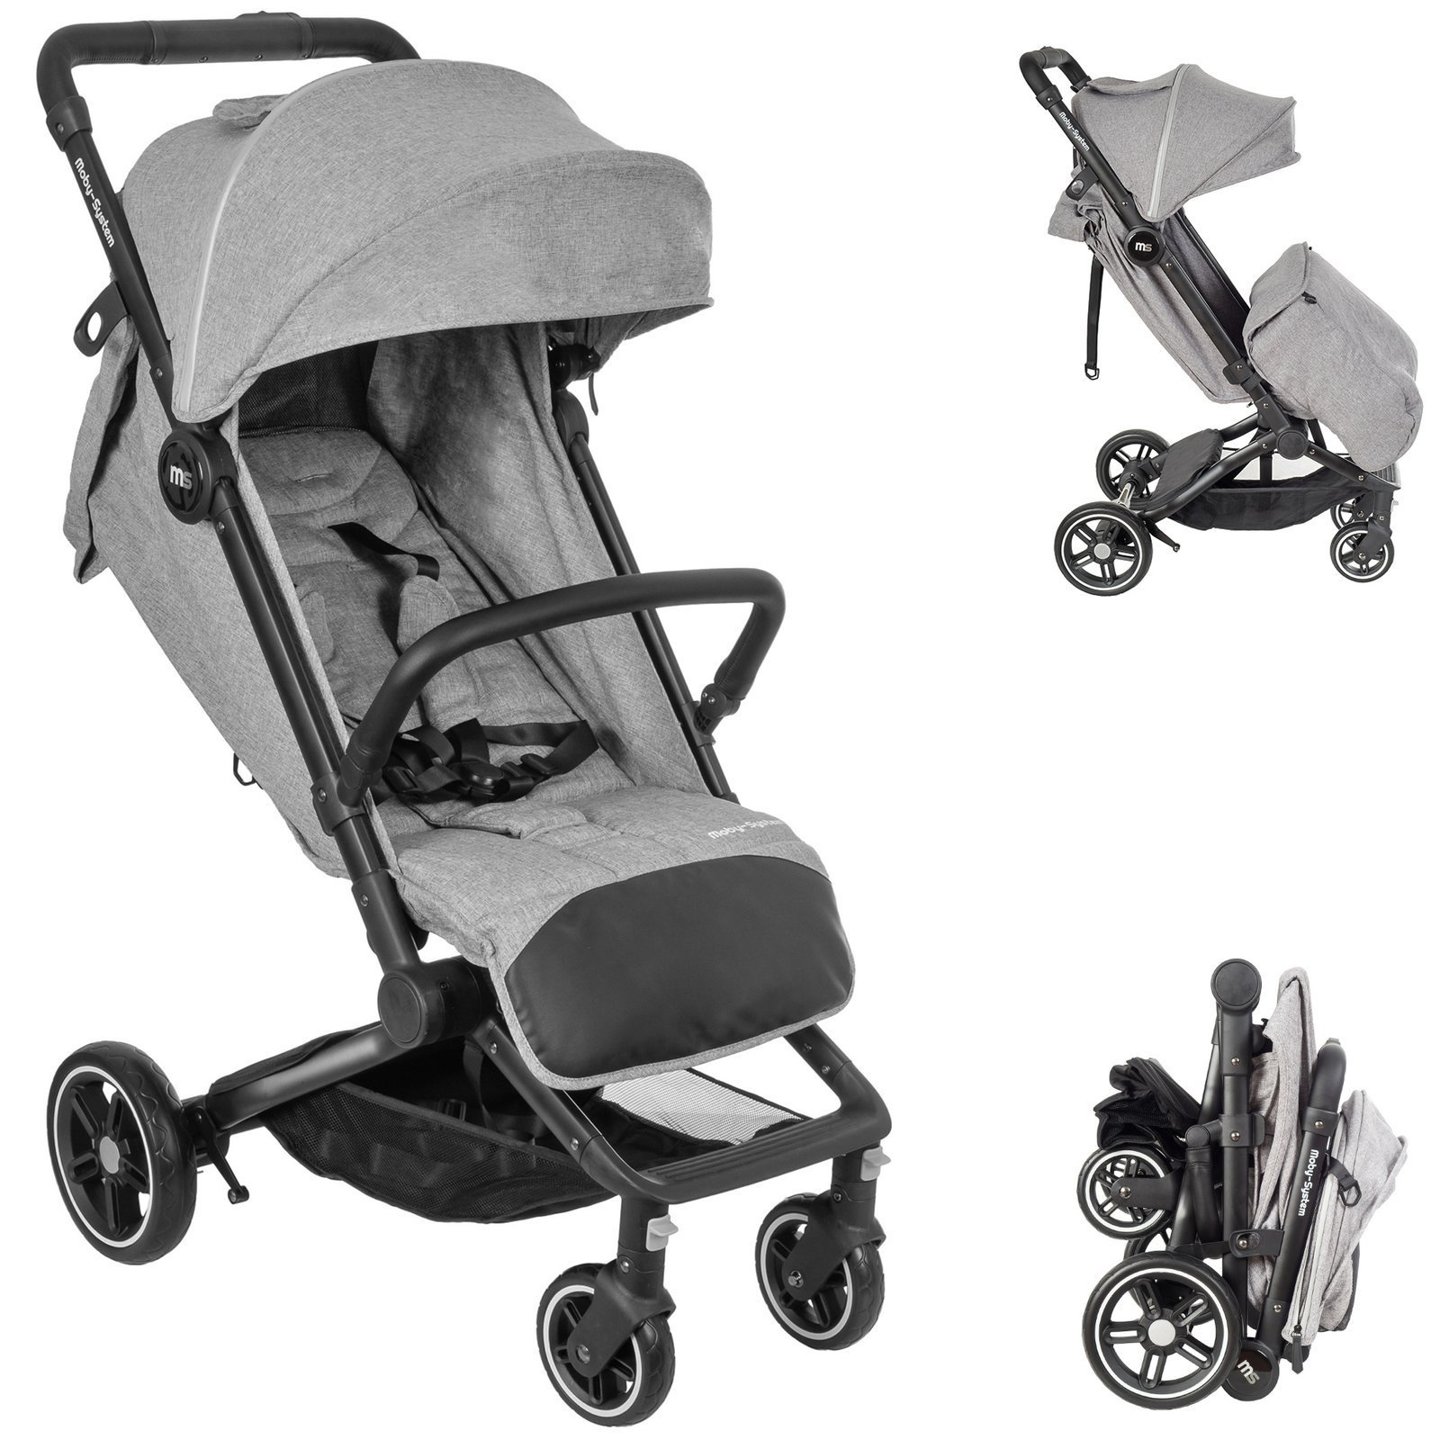 Moby-System LEON children’s stroller – gray